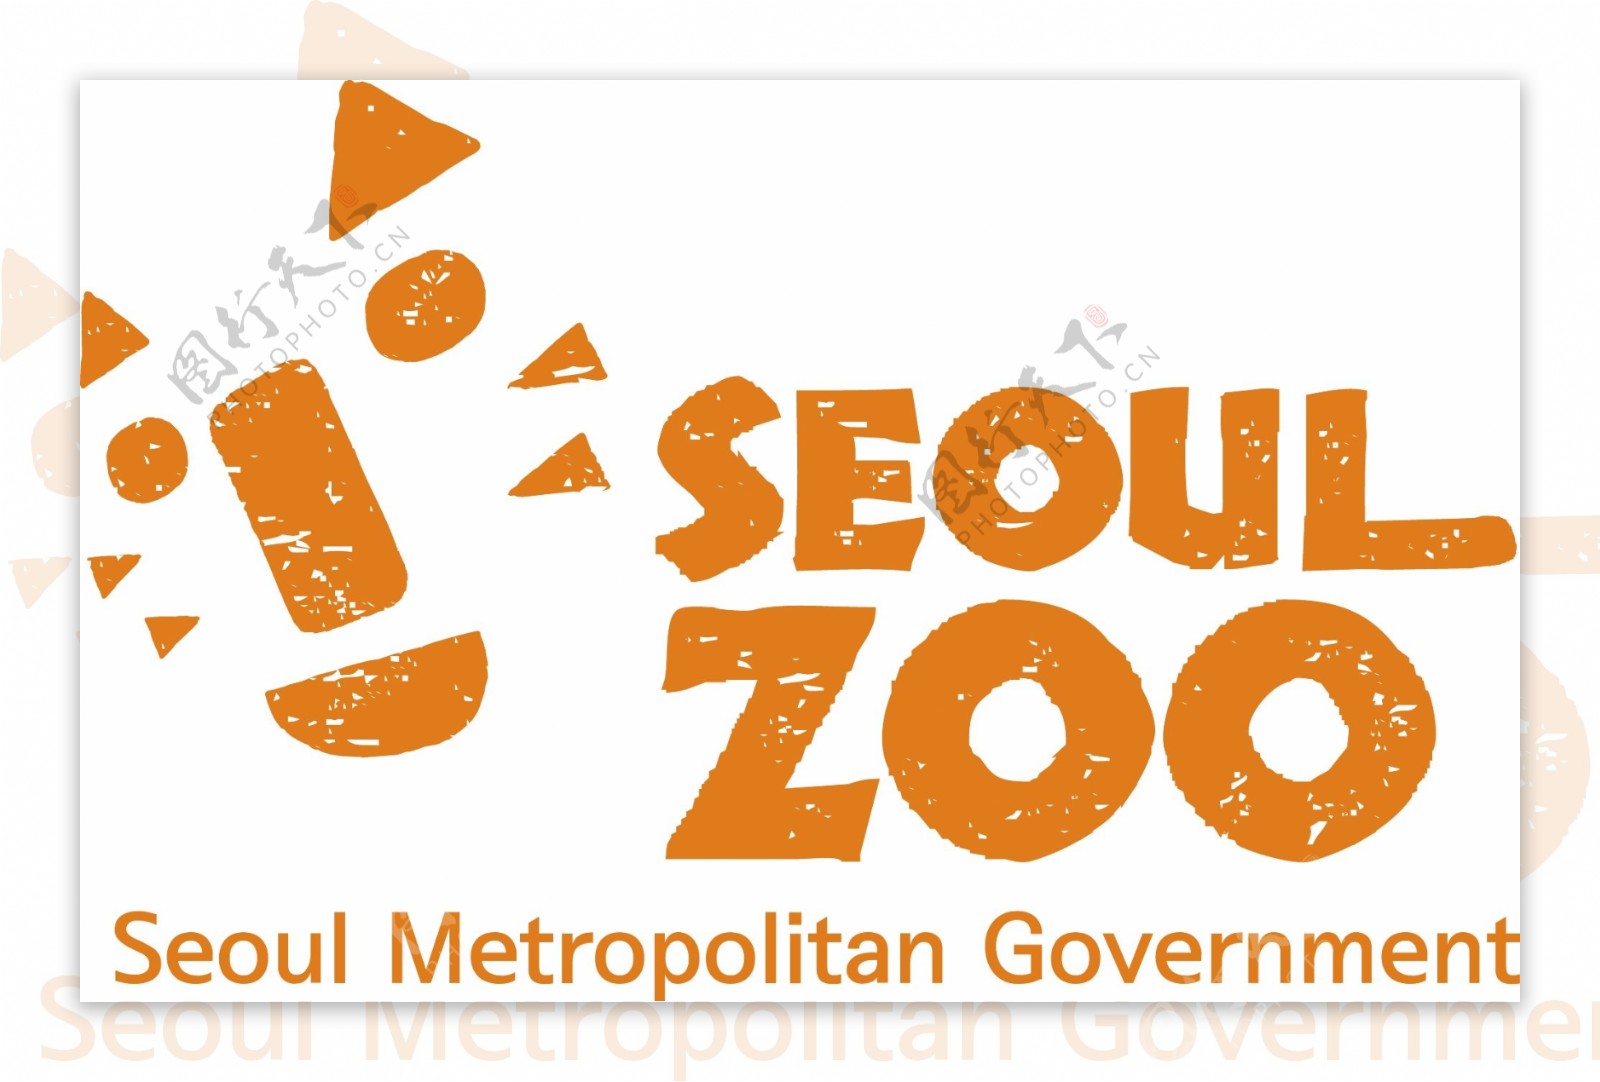 韩国首瓯动物园seoulzoo